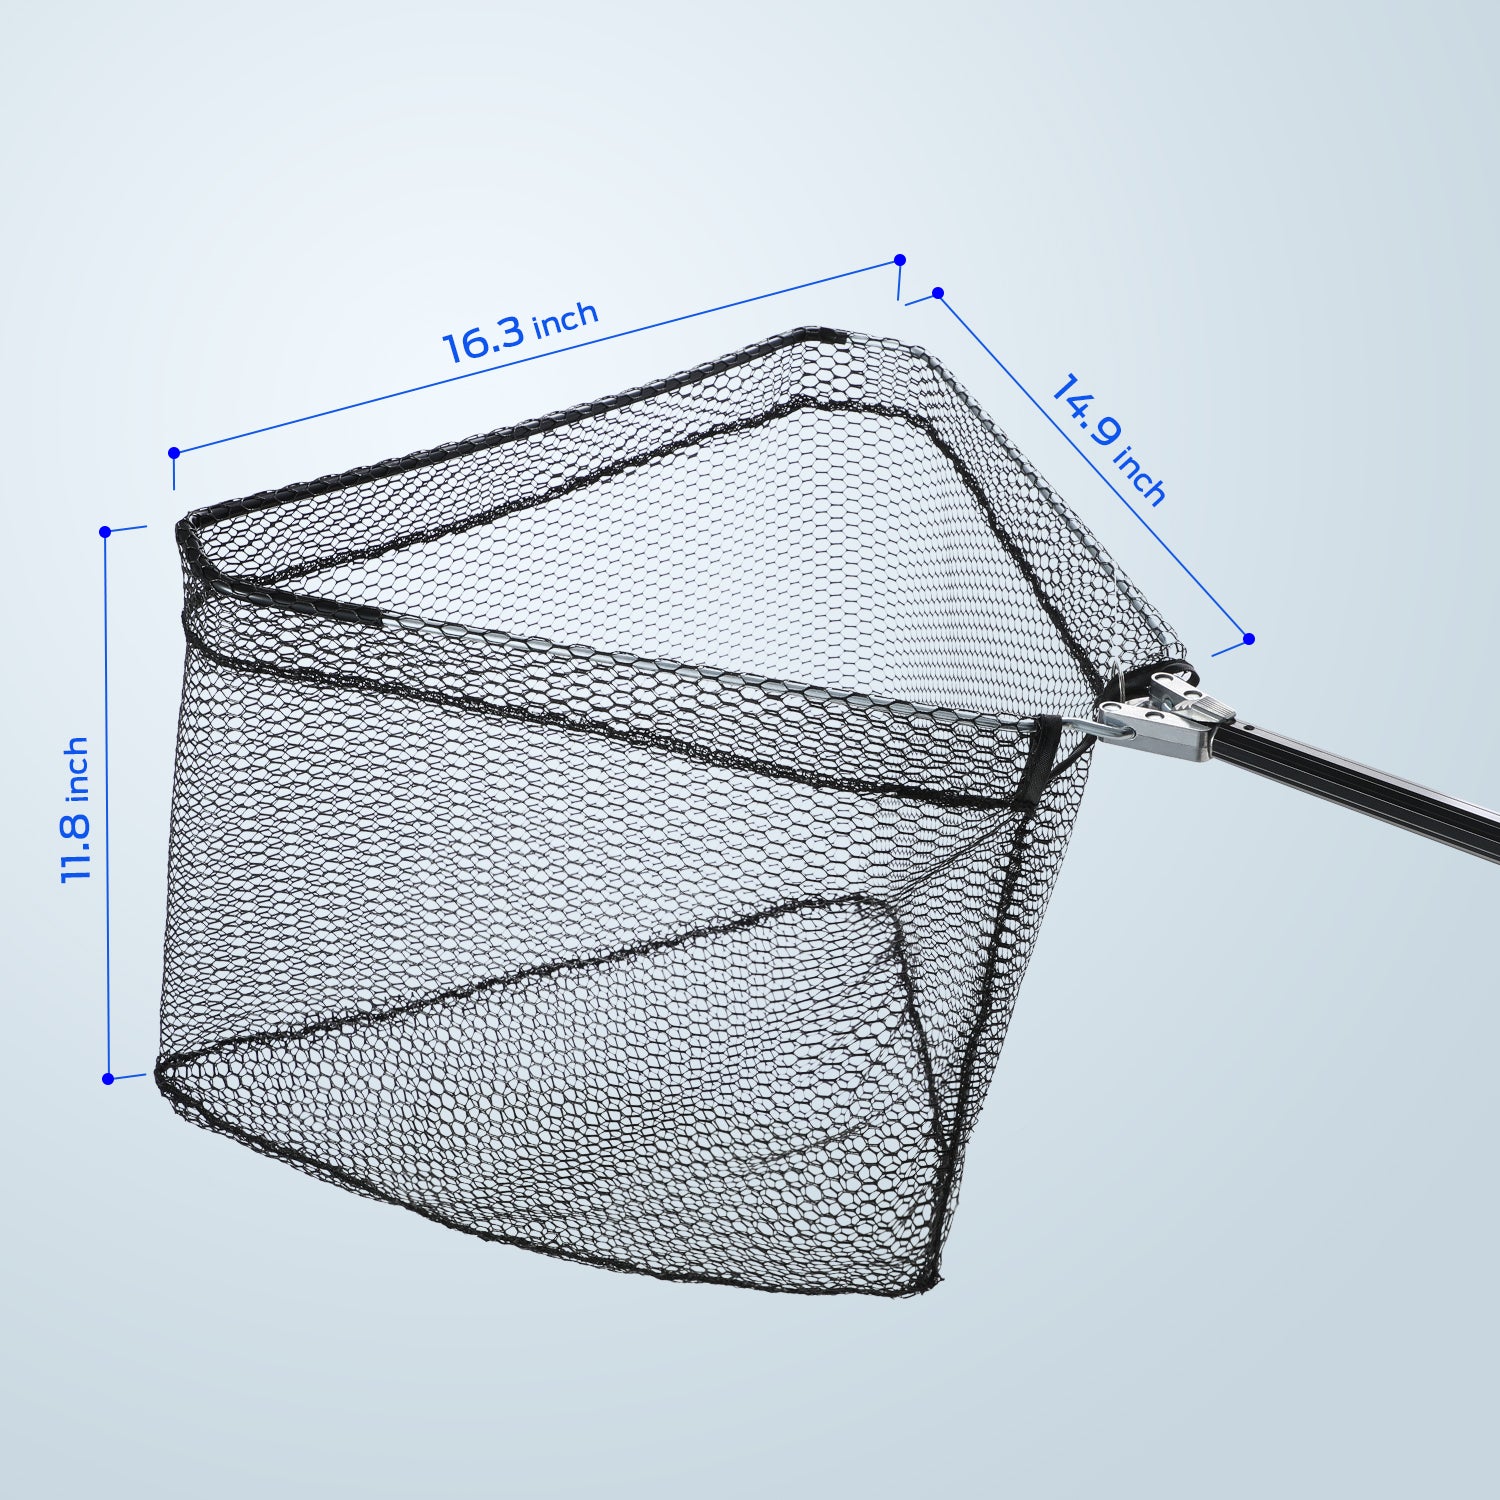 Ourlova Retractable Fishing Net Telescoping Foldable Landing Net Pole Folding Landing Net Blue